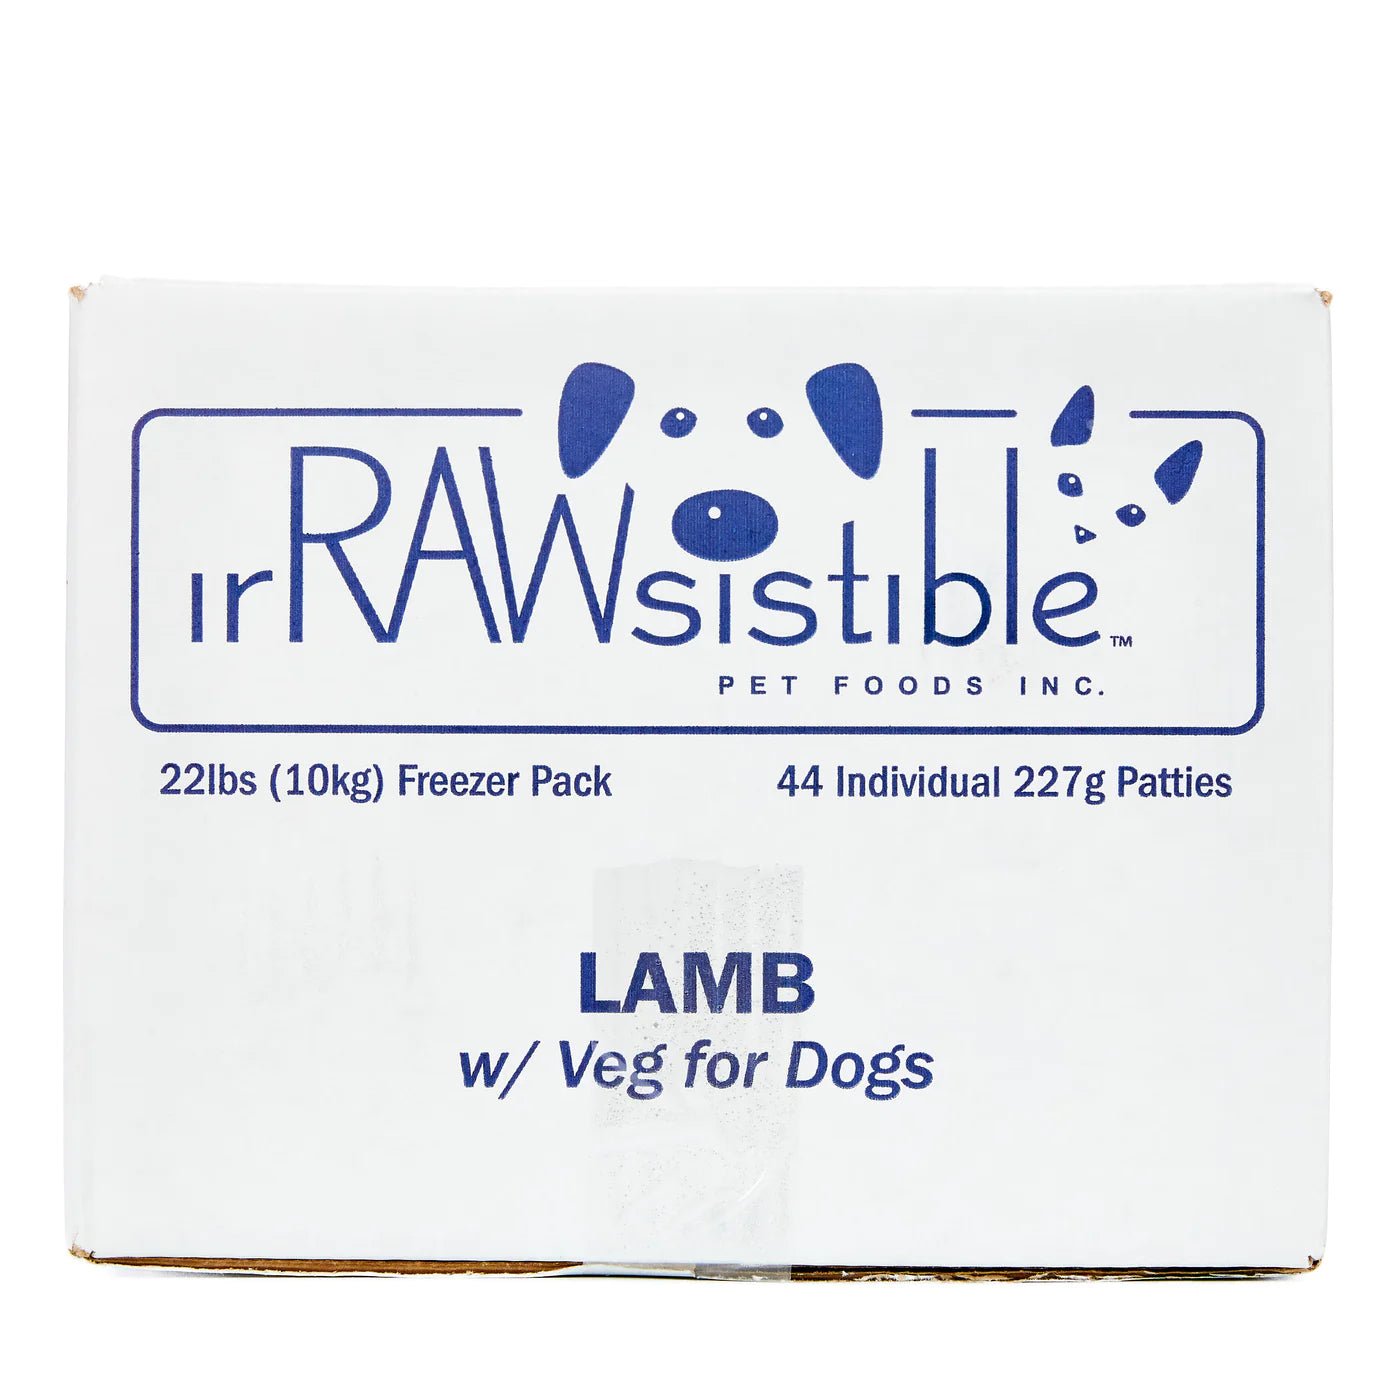 Irrawsitible Boneless Lamb Patties for Dogs (10kg Freezer Pack Box)